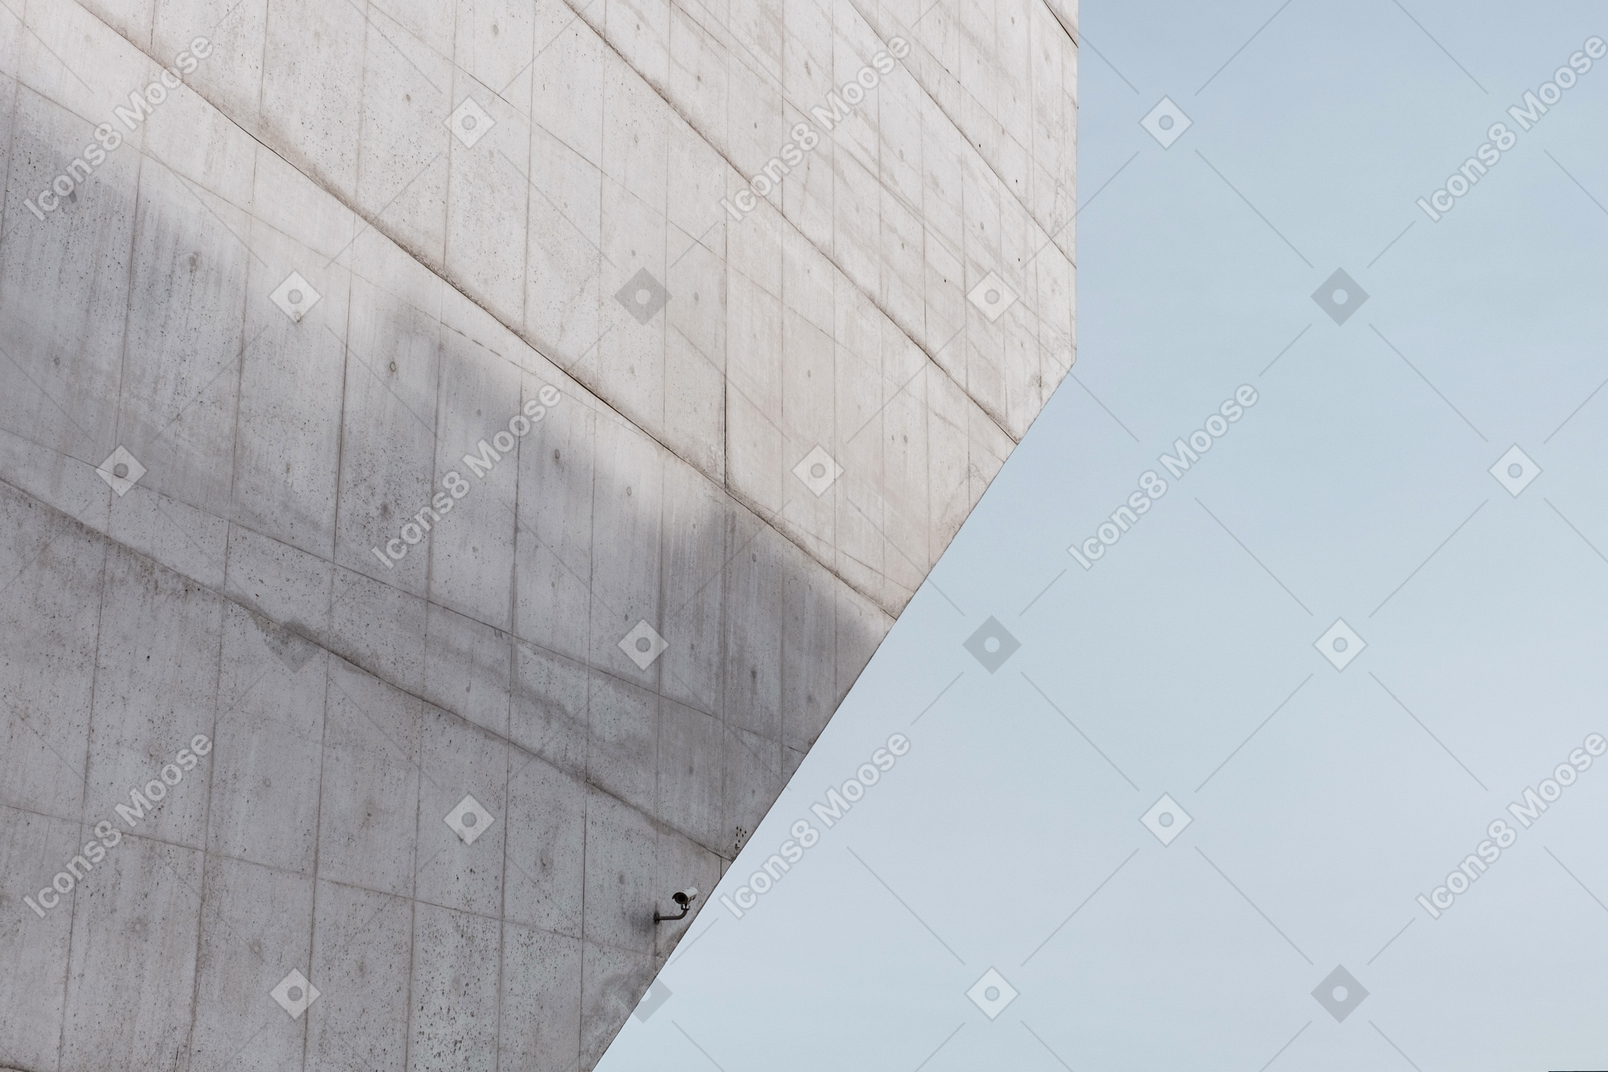 Blue sky and a concrete wall